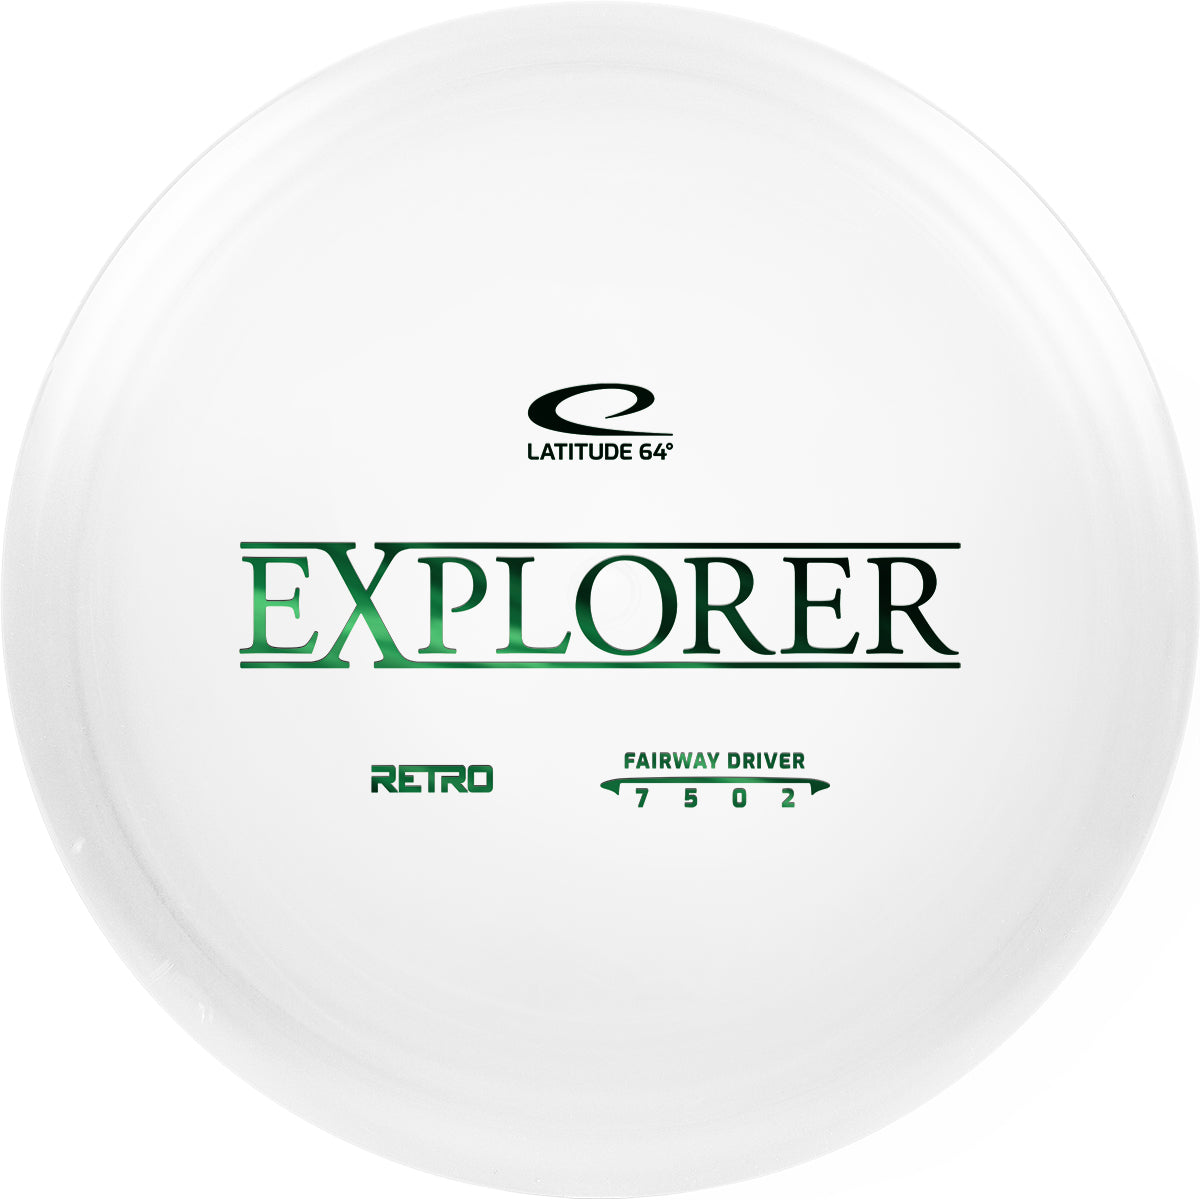 Retro Explorer (6539468636225)